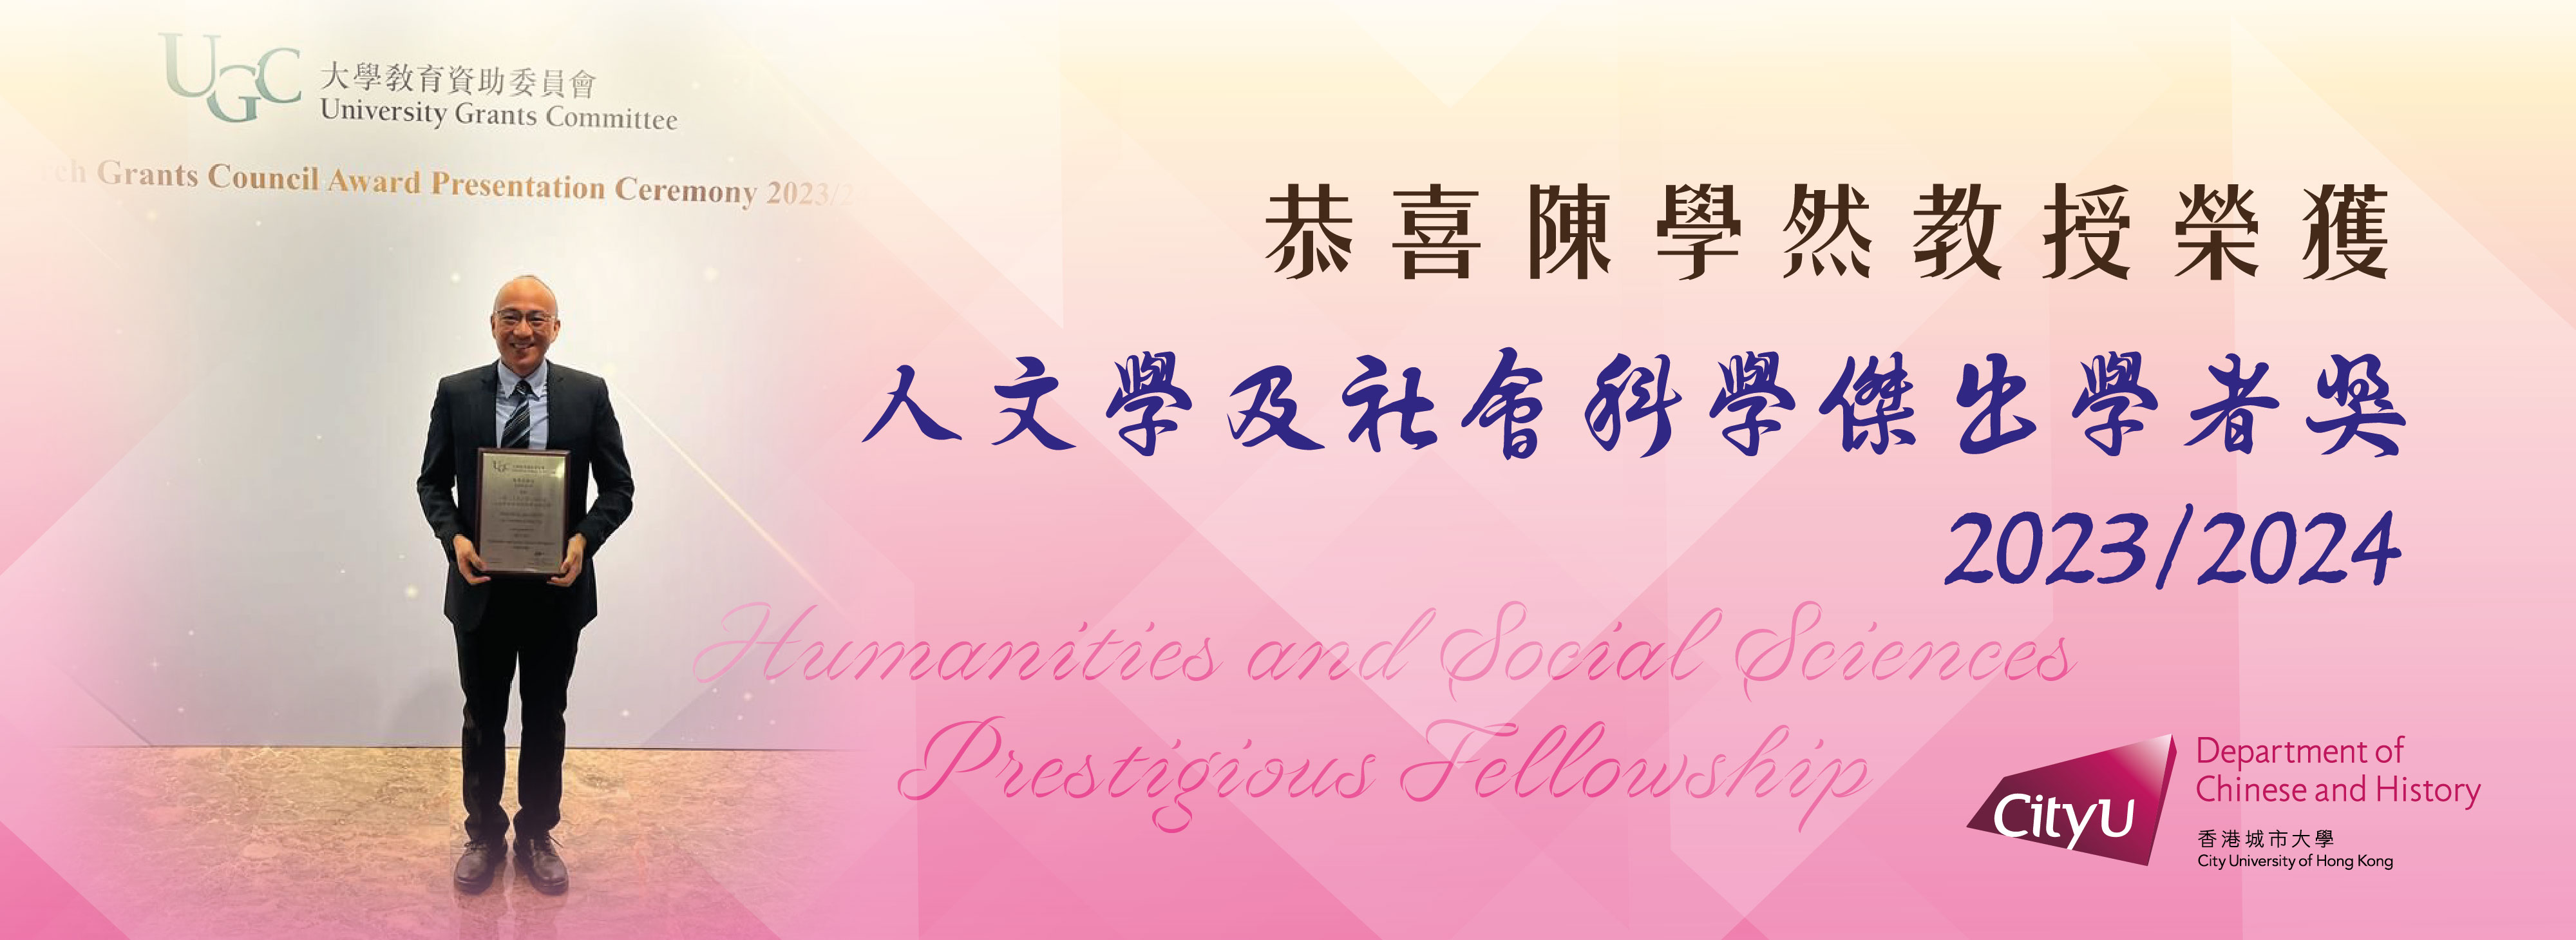 Professor Chan Hok Yin awarded UGC Humanities and Social Sciences Prestigious Fellowship